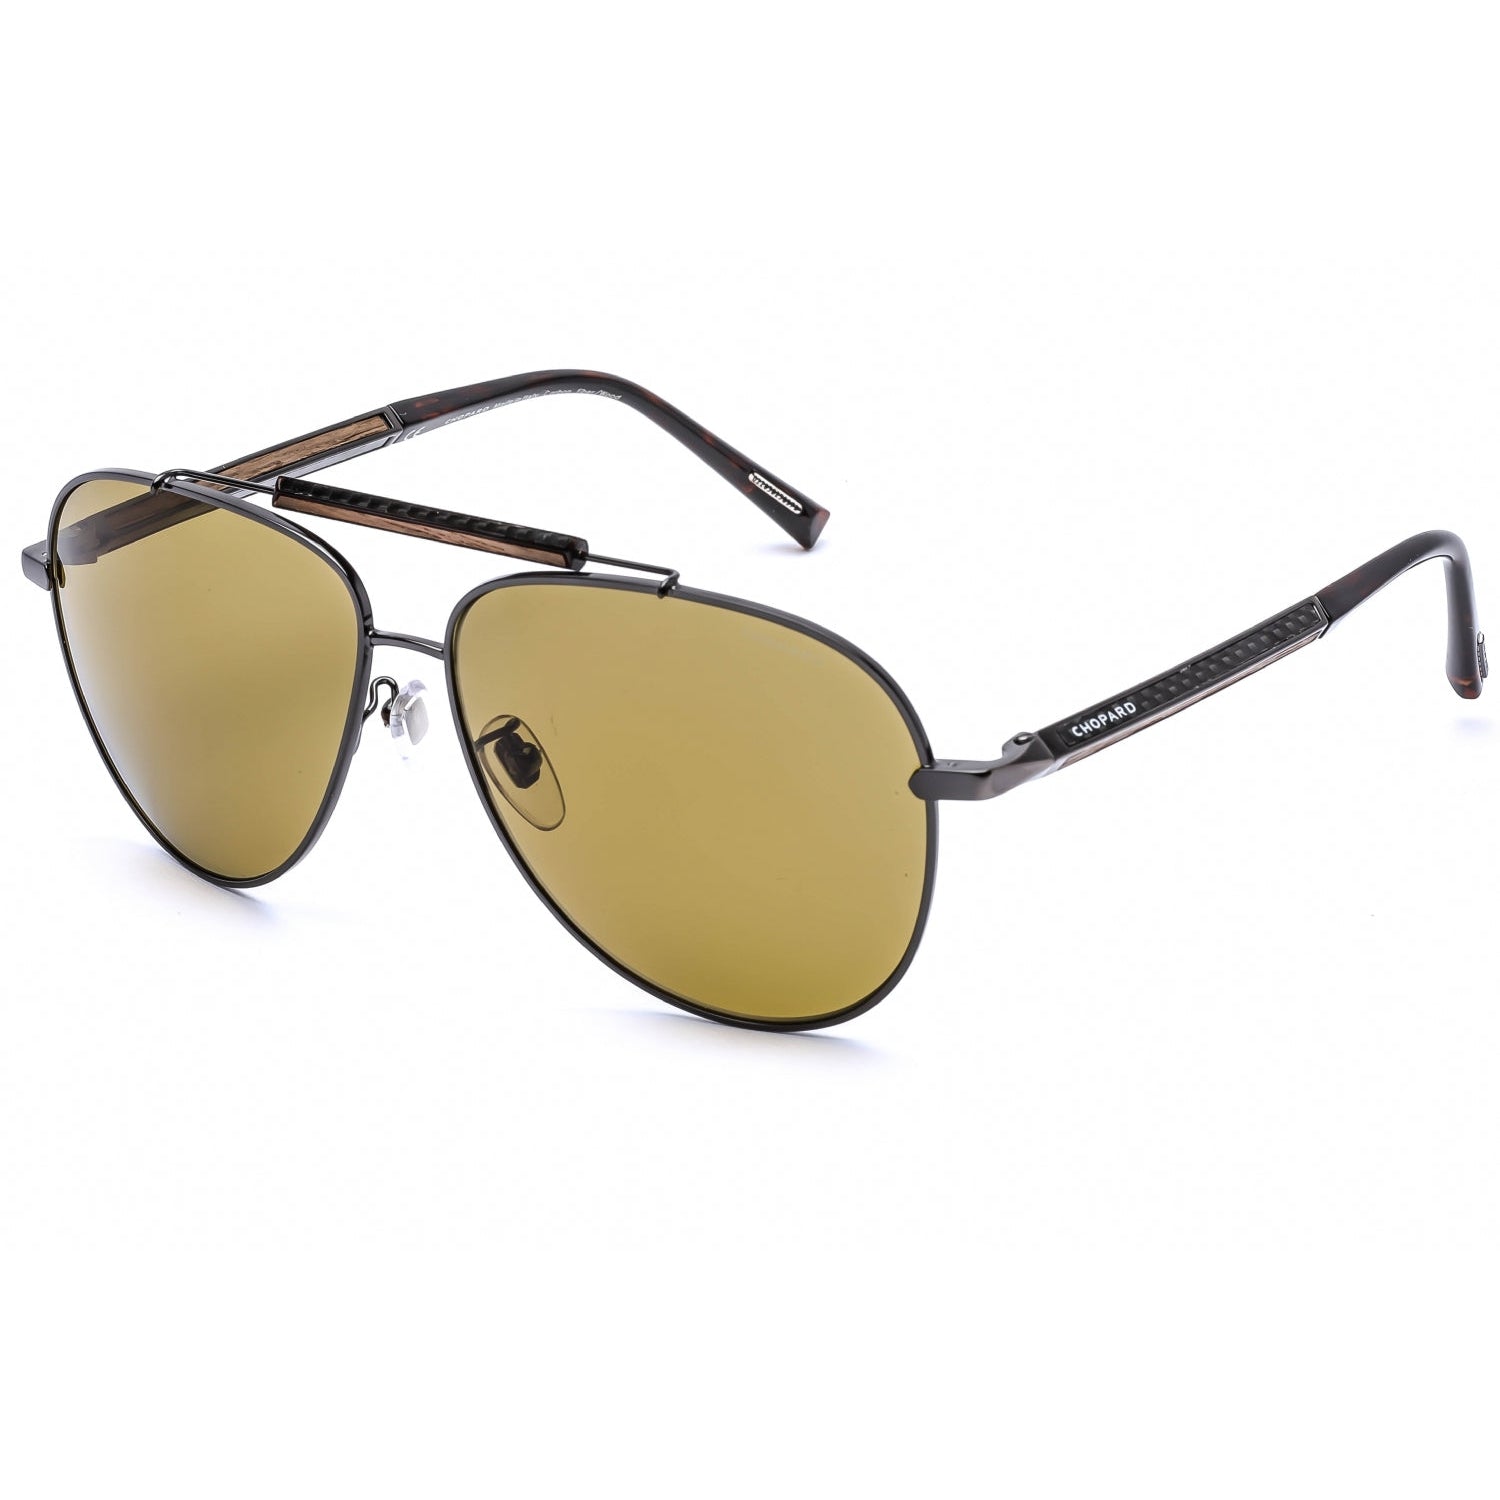 Chopard SCHC94 Sunglasses Ruthenium/Carbon Fiber/Wood / Brown Polarized